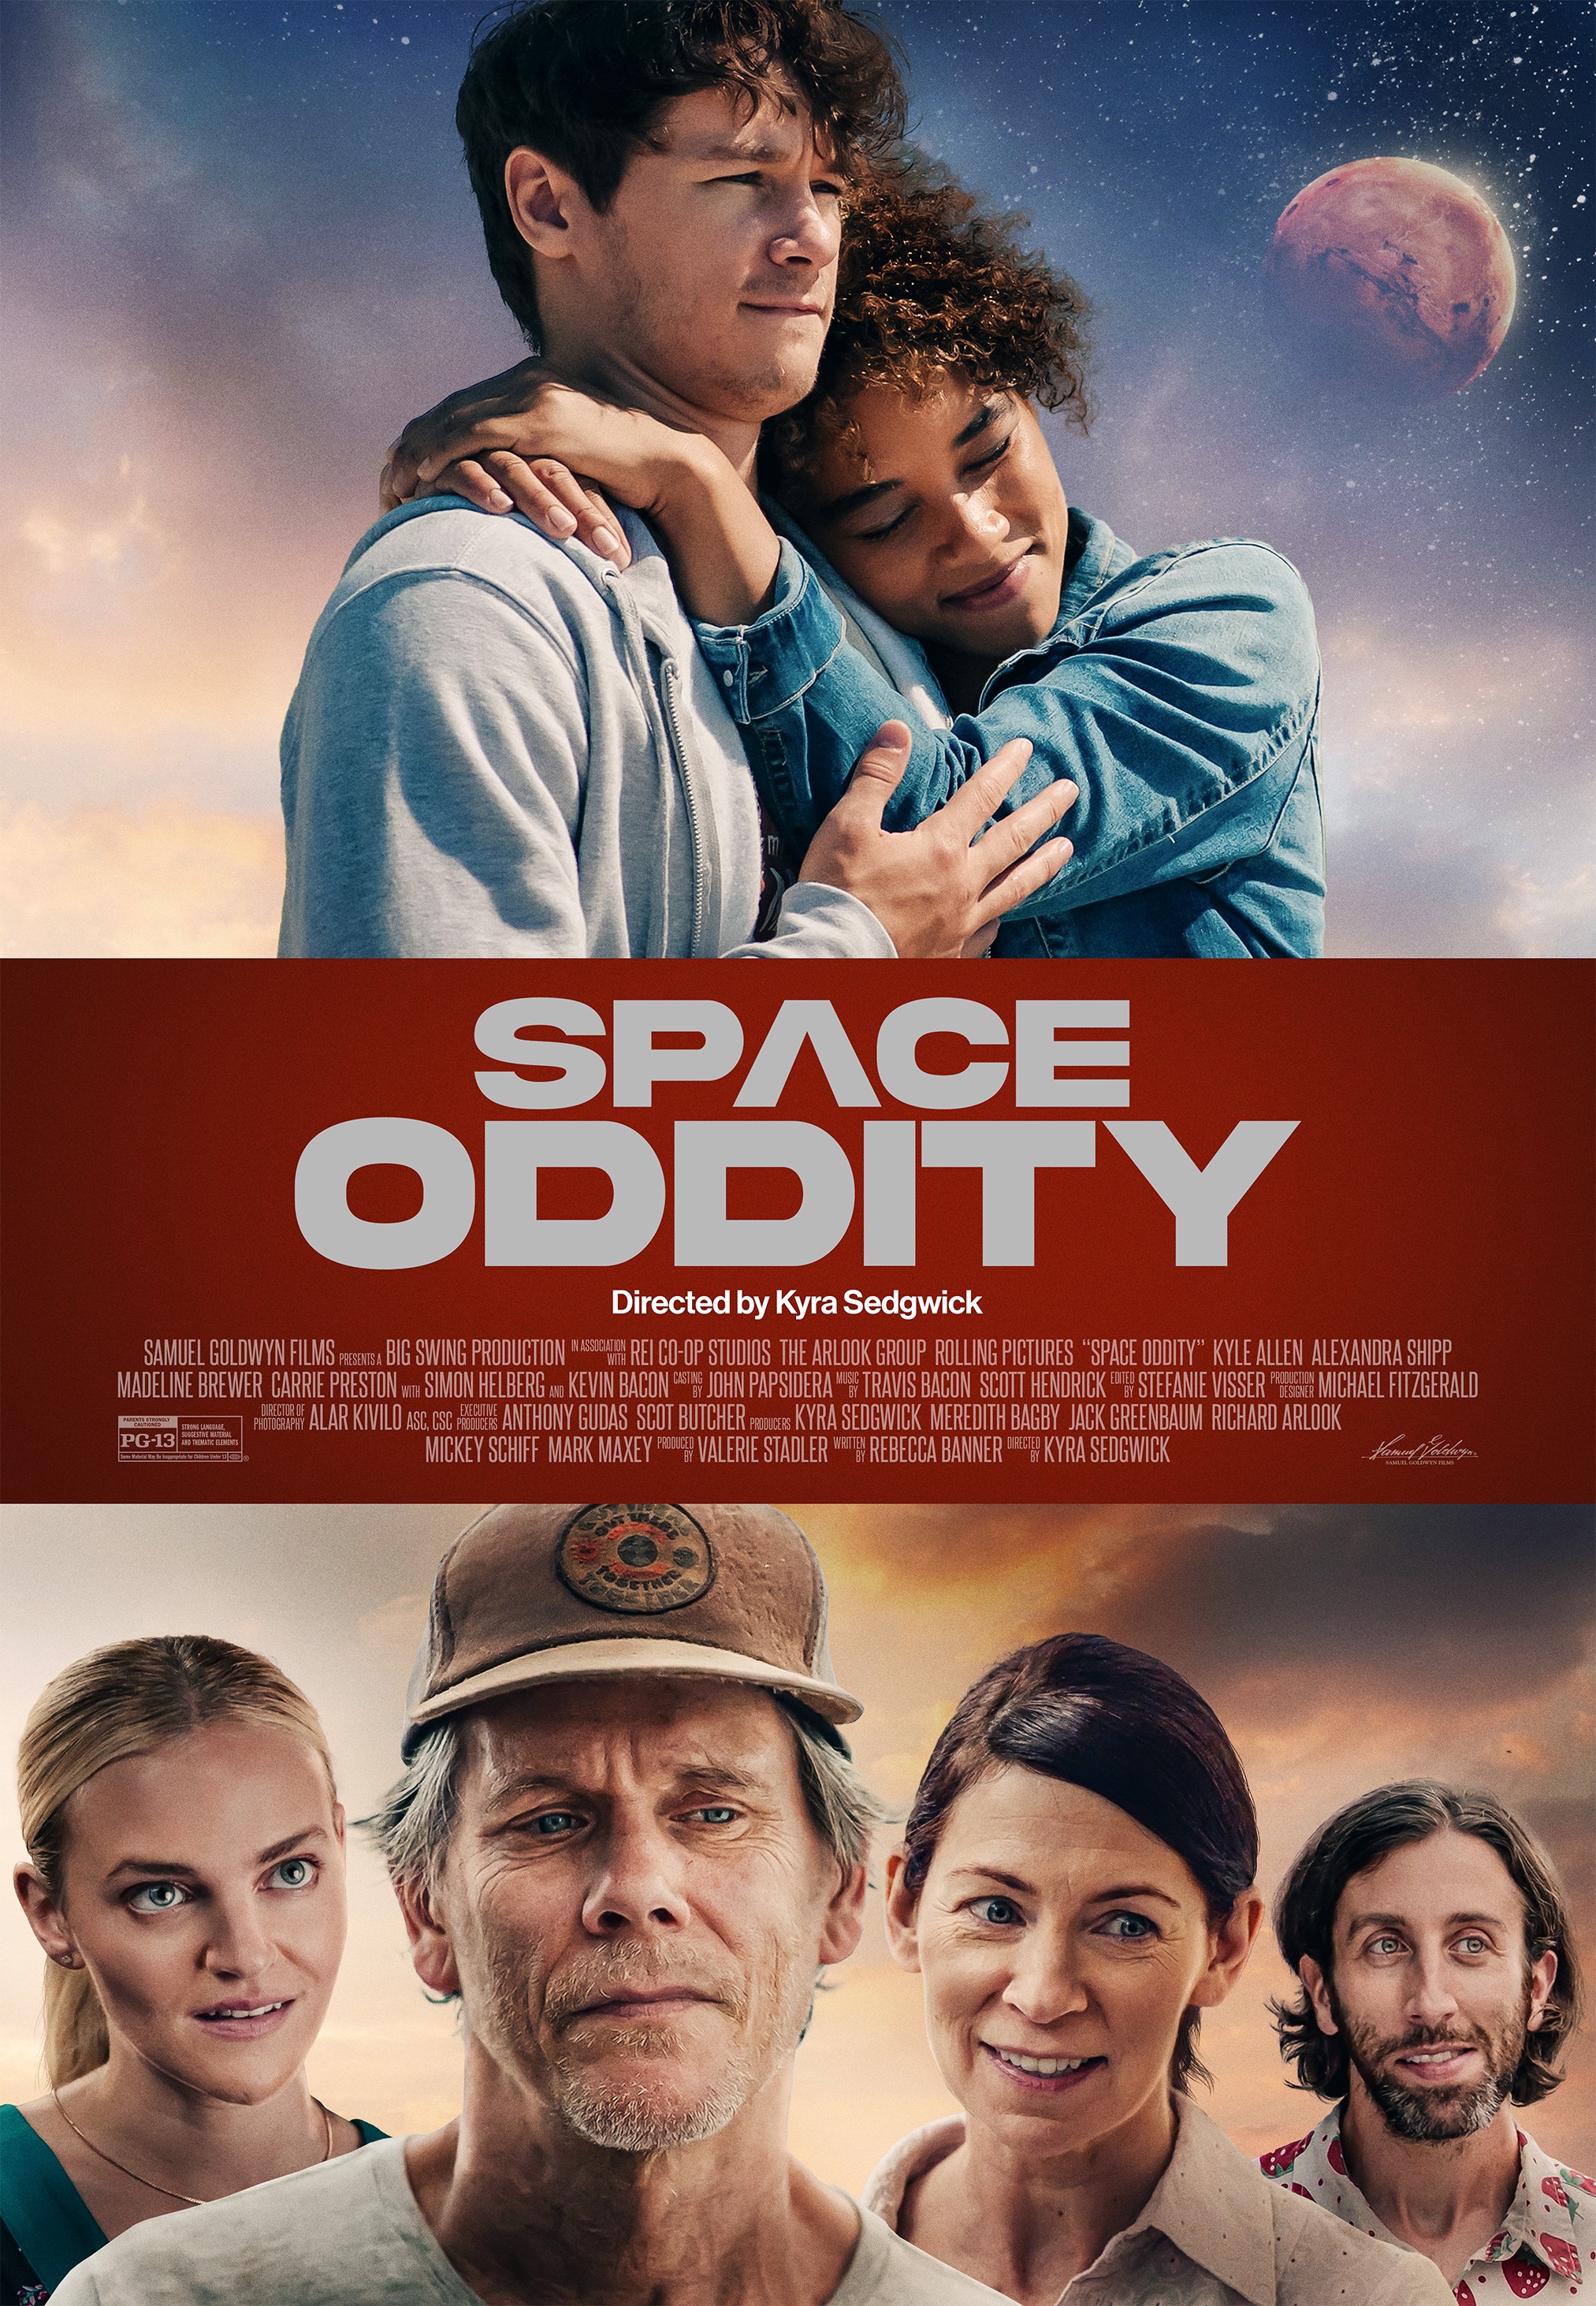 Space Oddity — Last night, I had a dream where I got some